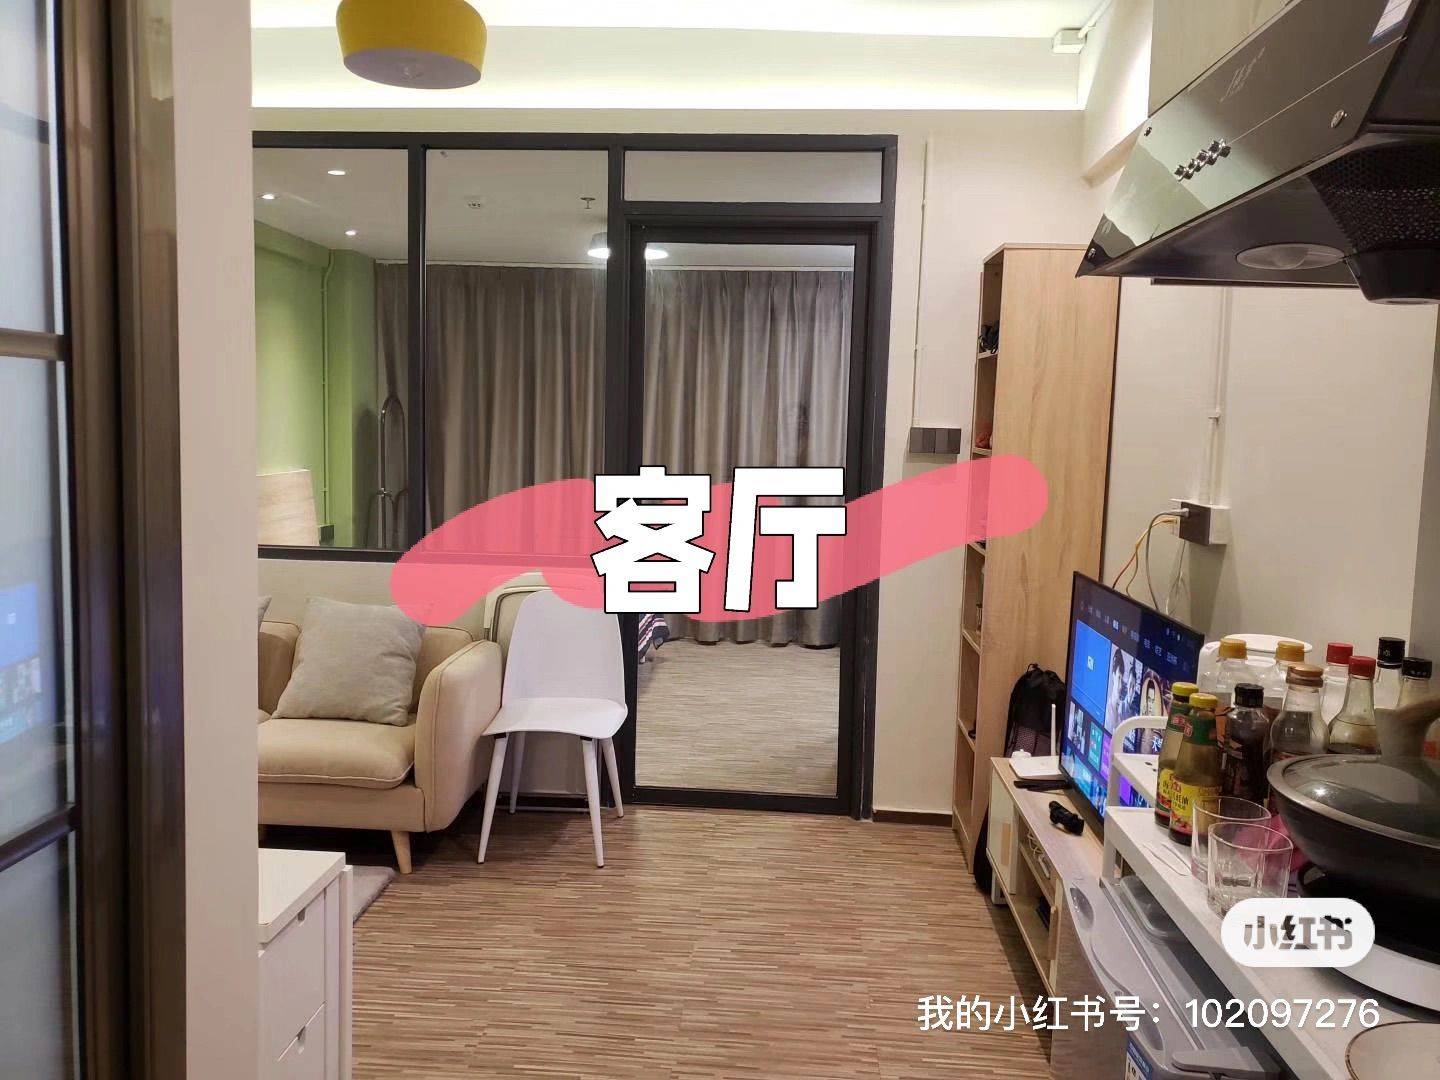 Shenzhen-BaoAn-Cozy Home,Clean&Comfy,No Gender Limit,Hustle & Bustle,“Friends”,Chilled